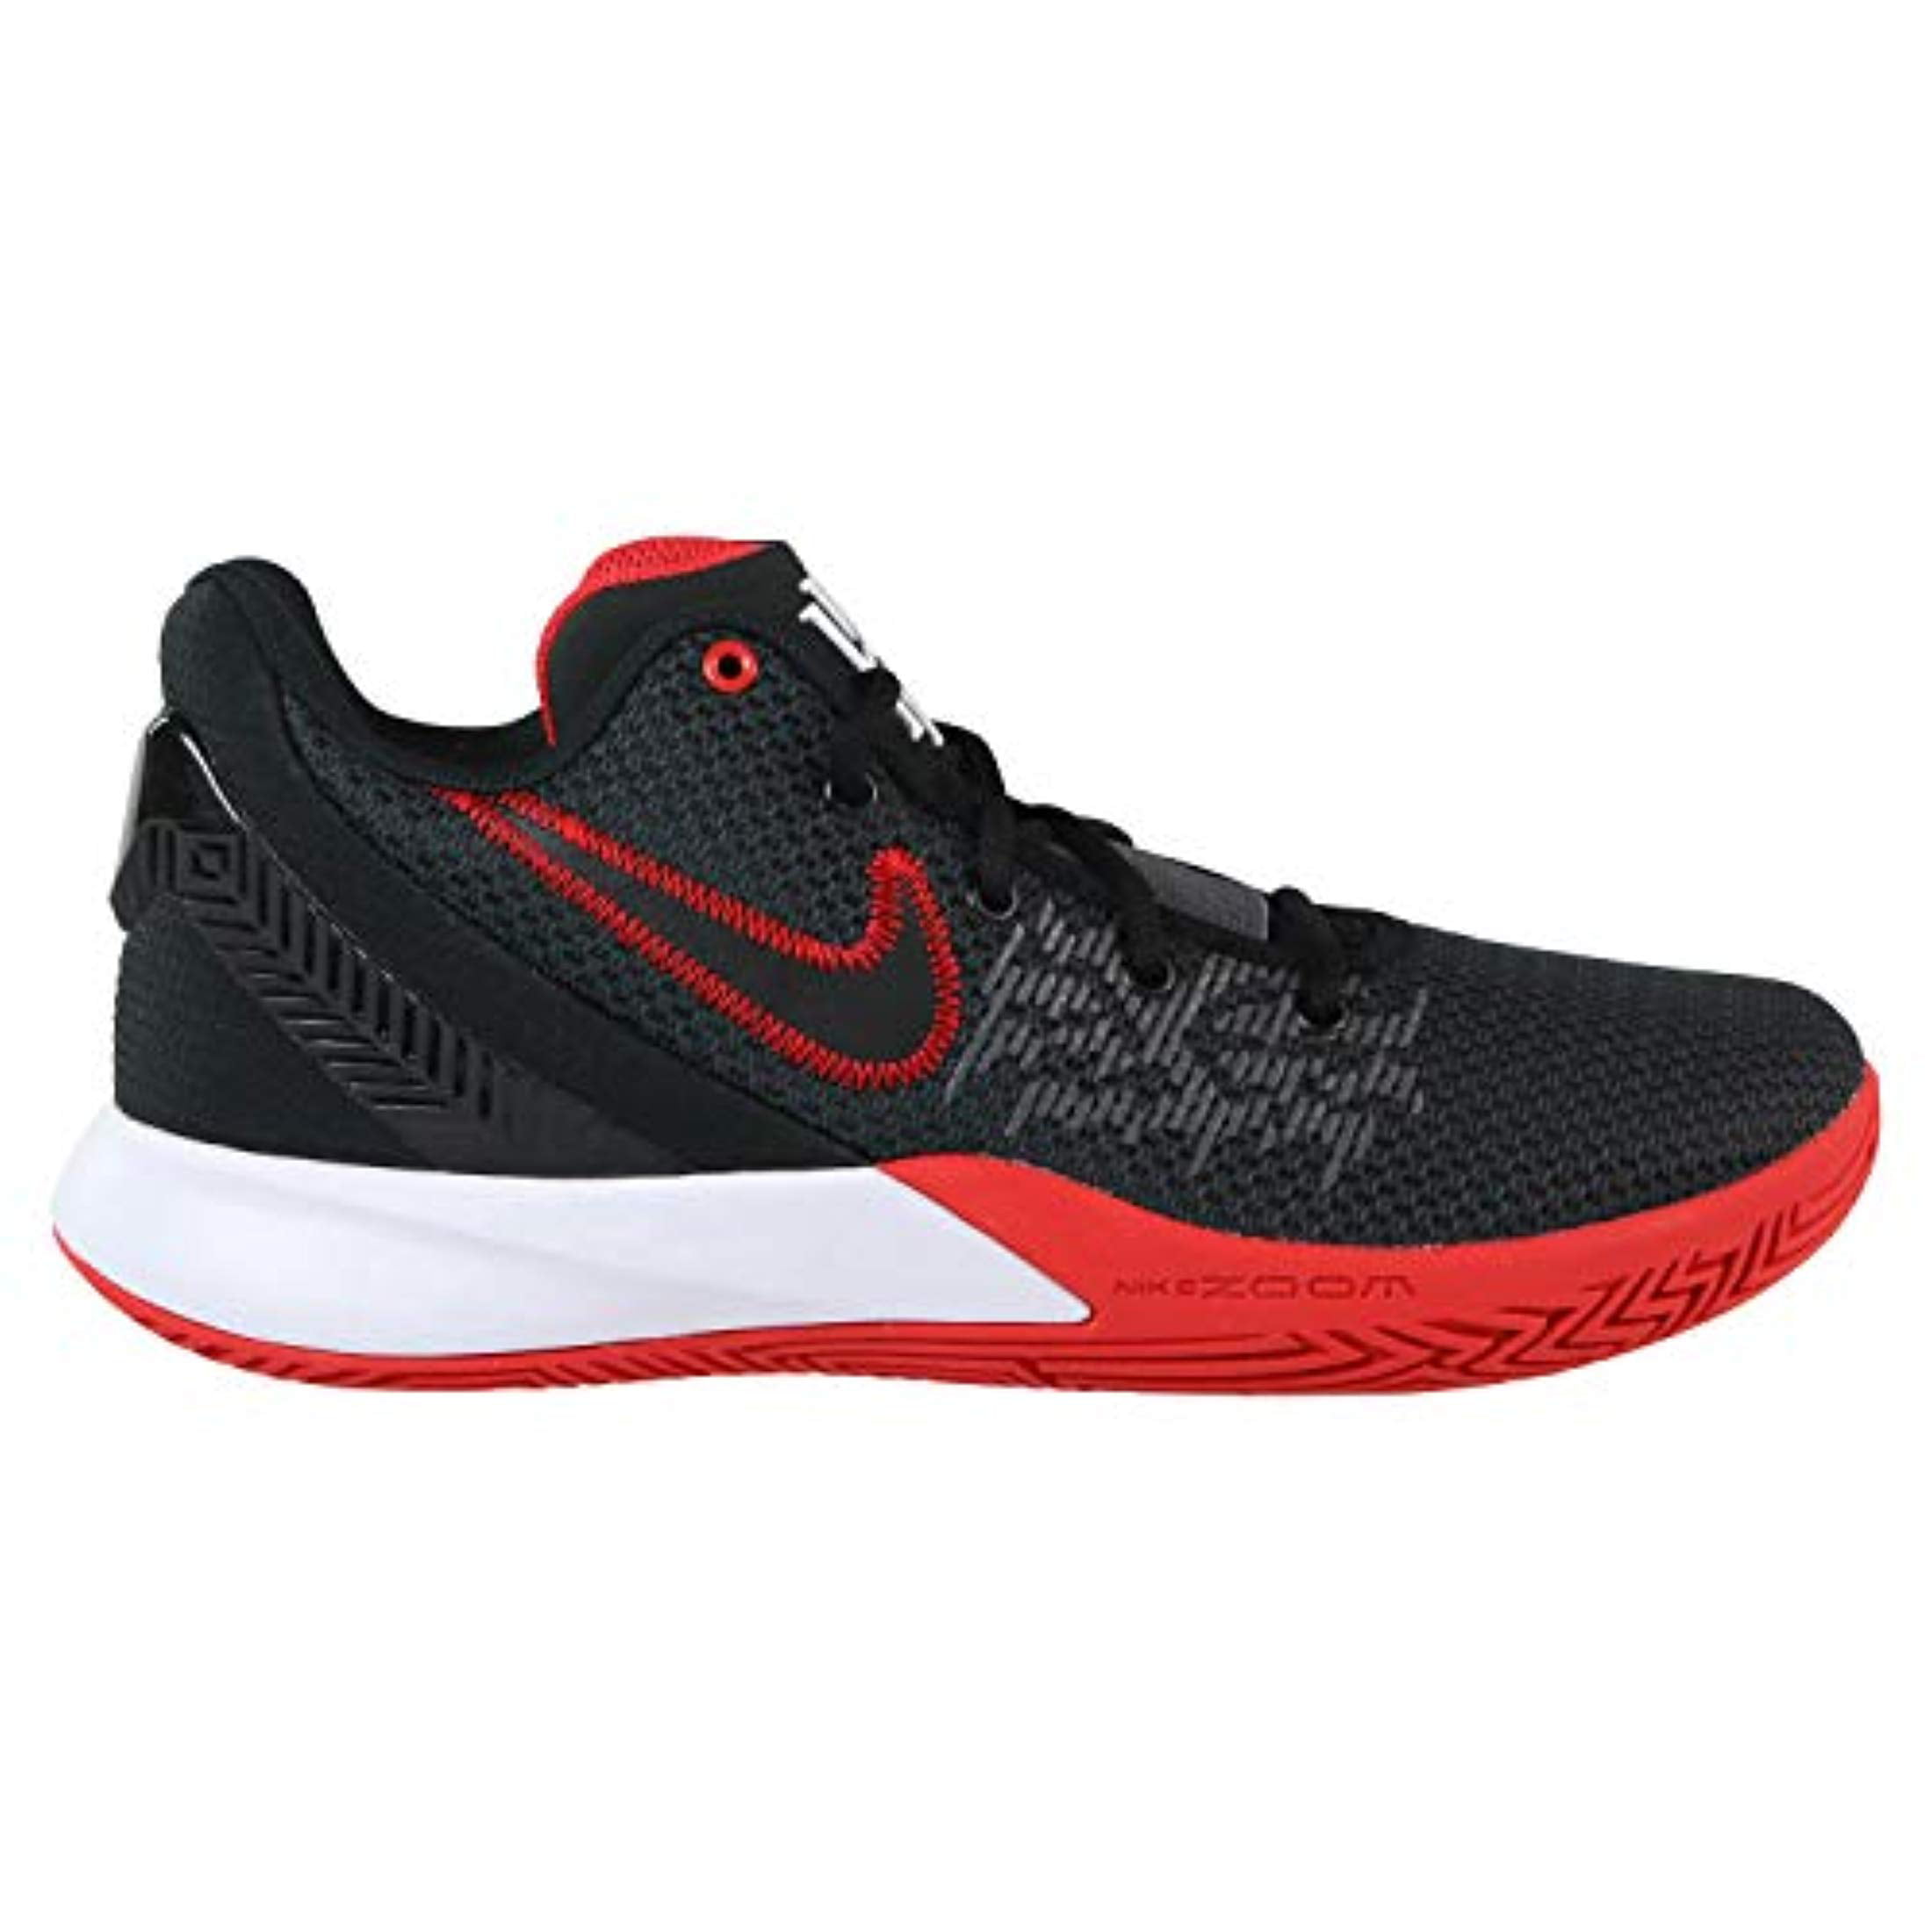 Nike Men's Kyrie Flytrap II Basketball Shoes(Black/Red,11,D US) - Walmart.com